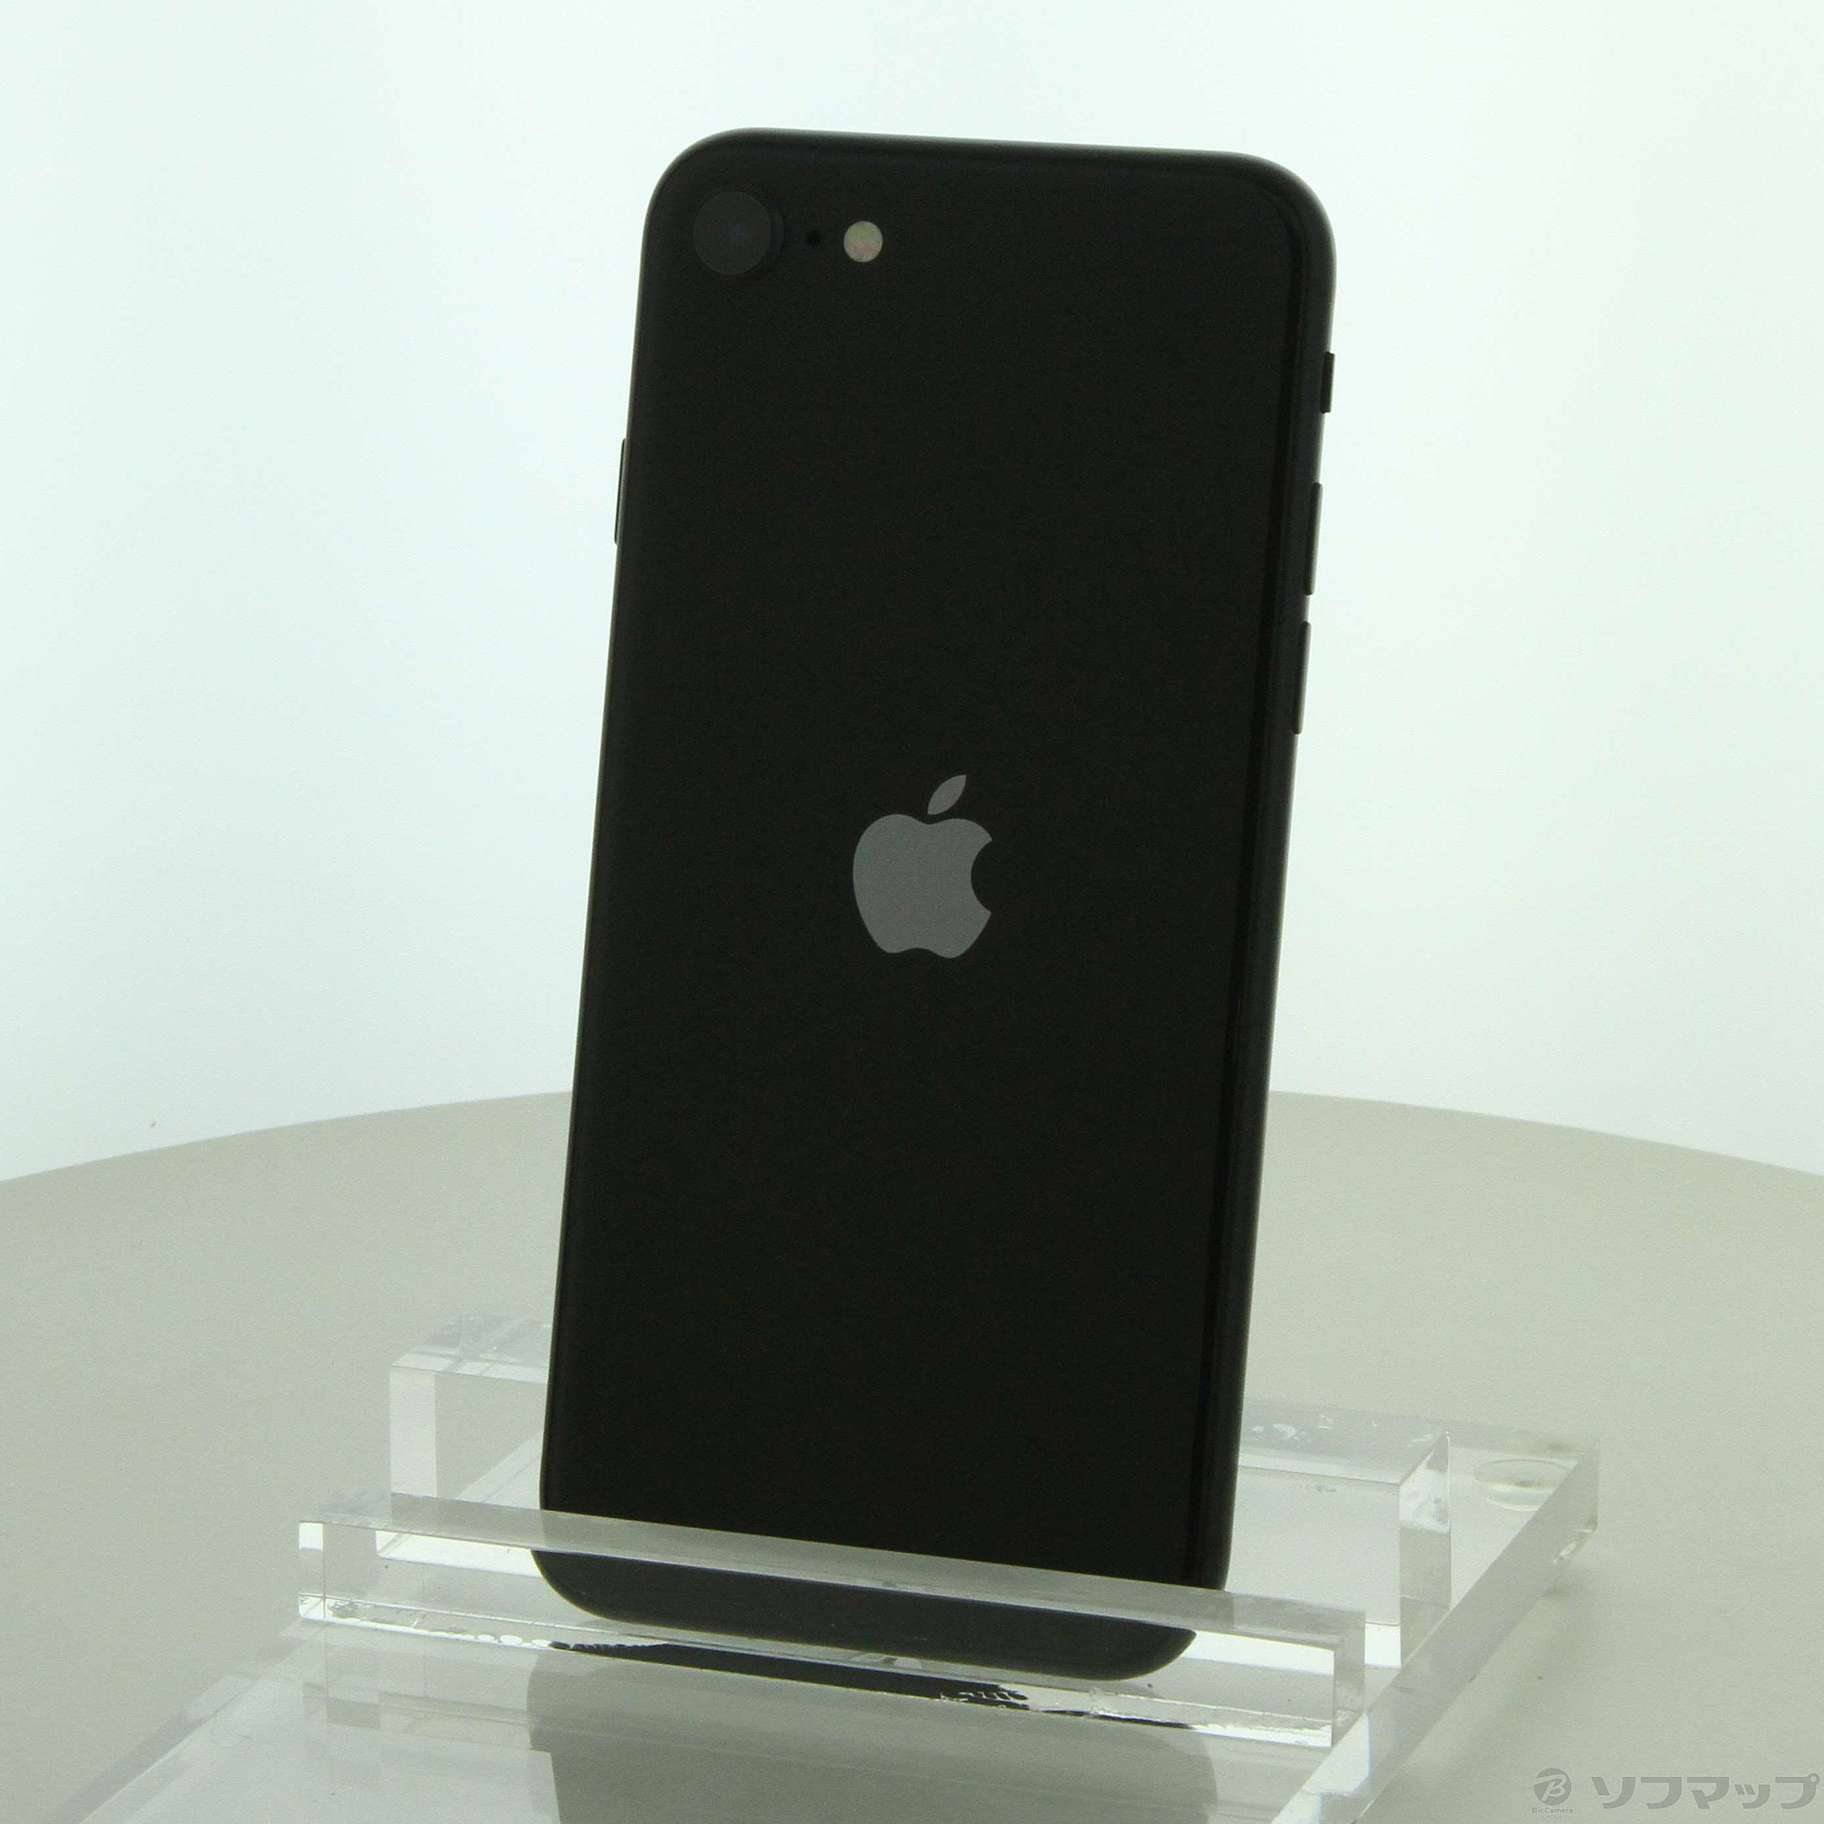 iPhoneSE 第2世代 64GB SIMフリー ブラック